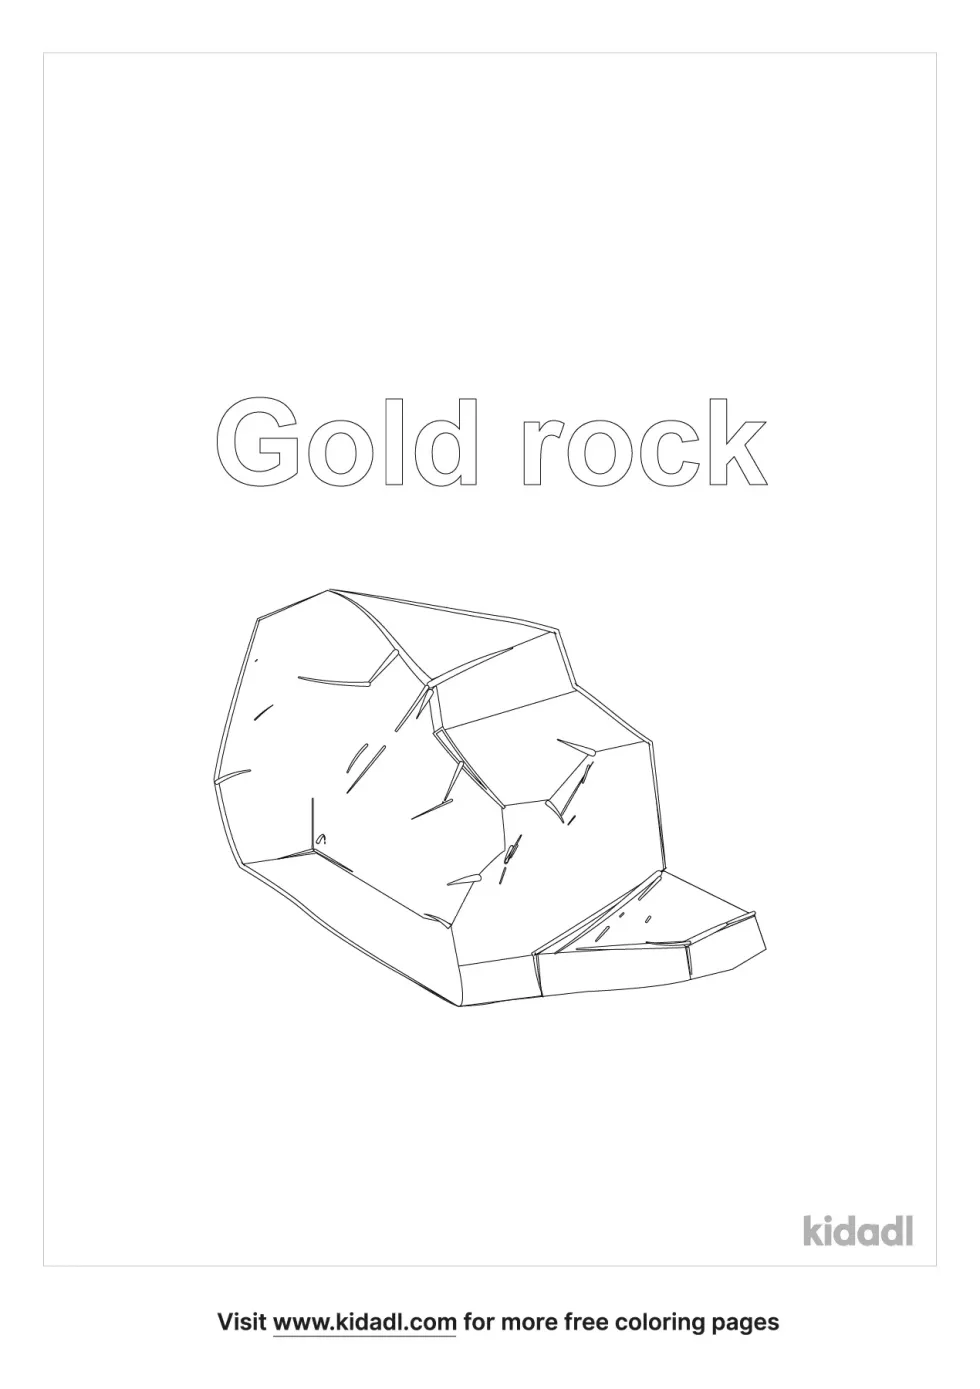 Gold Rock